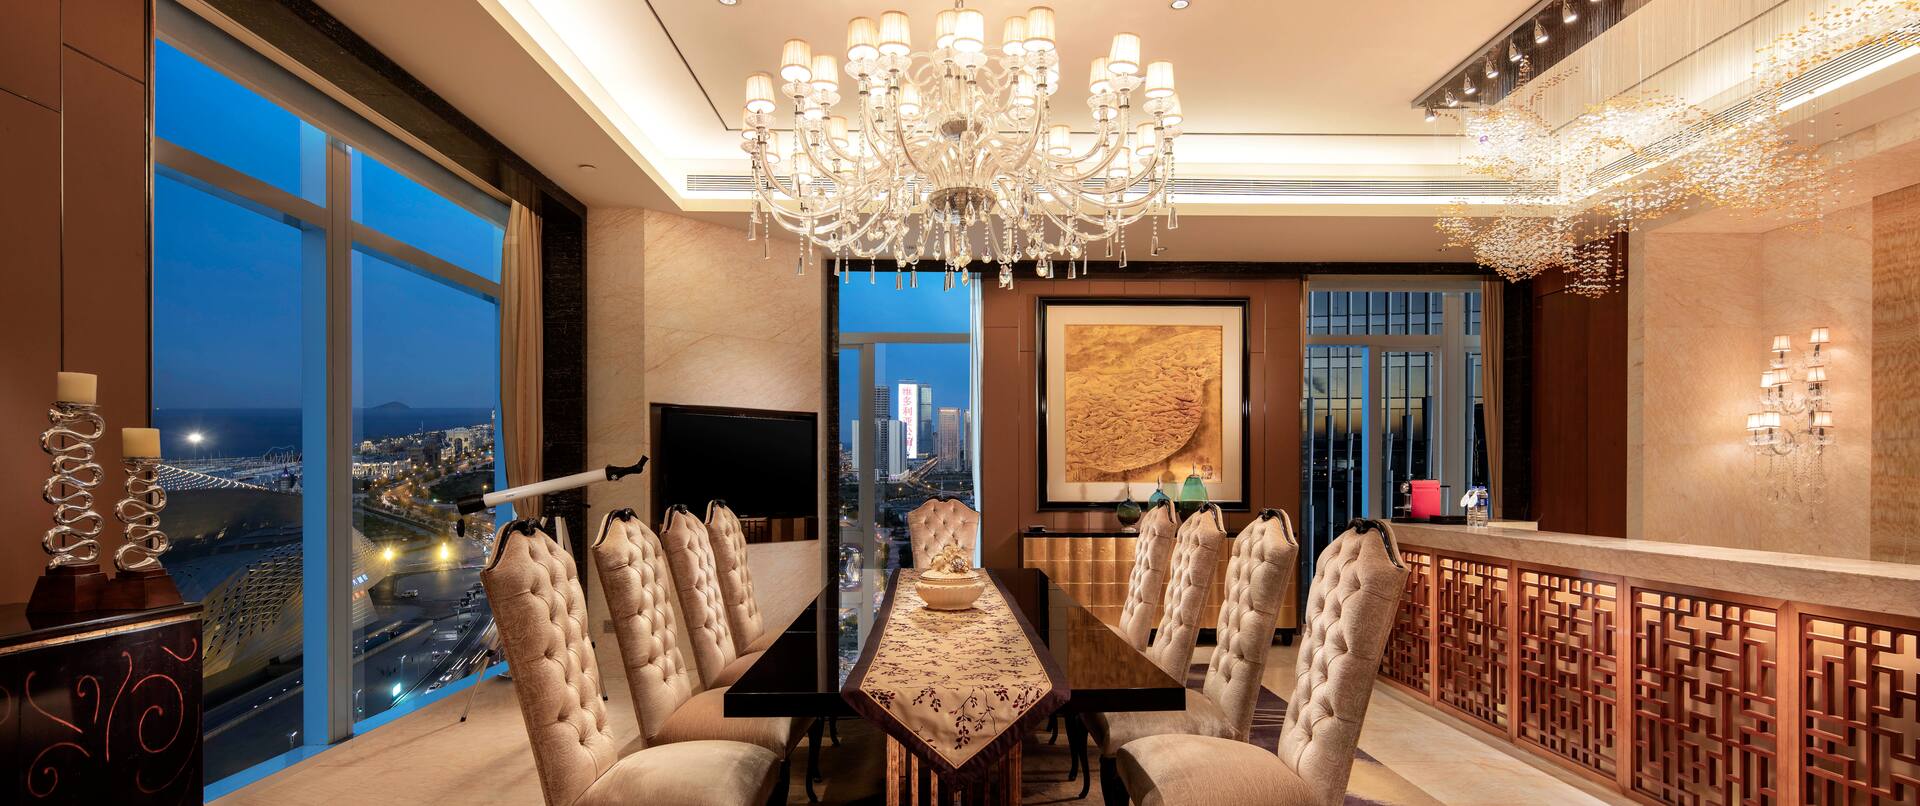 Presidential Suite Dining Room